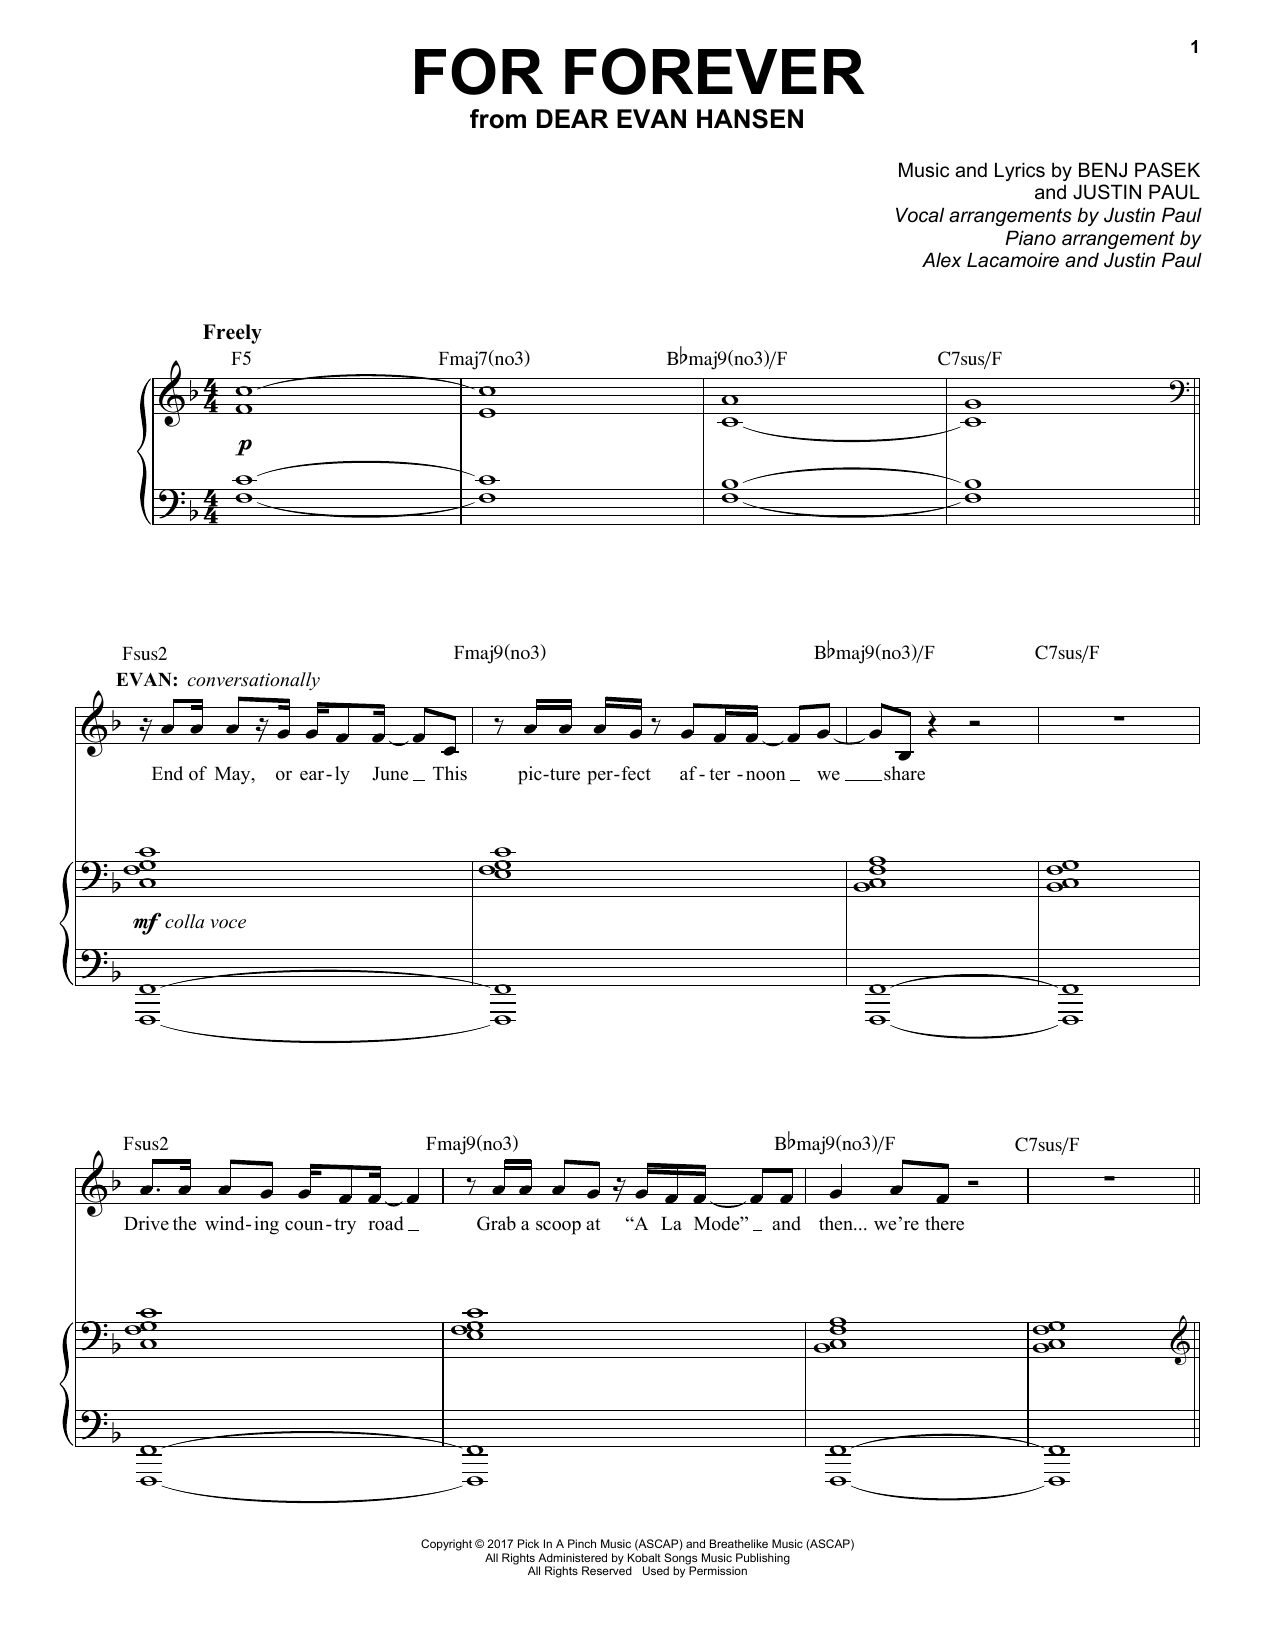 Pasek & Paul For Forever (from Dear Evan Hansen) Sheet Music Notes & Chords for VPROPG - Download or Print PDF